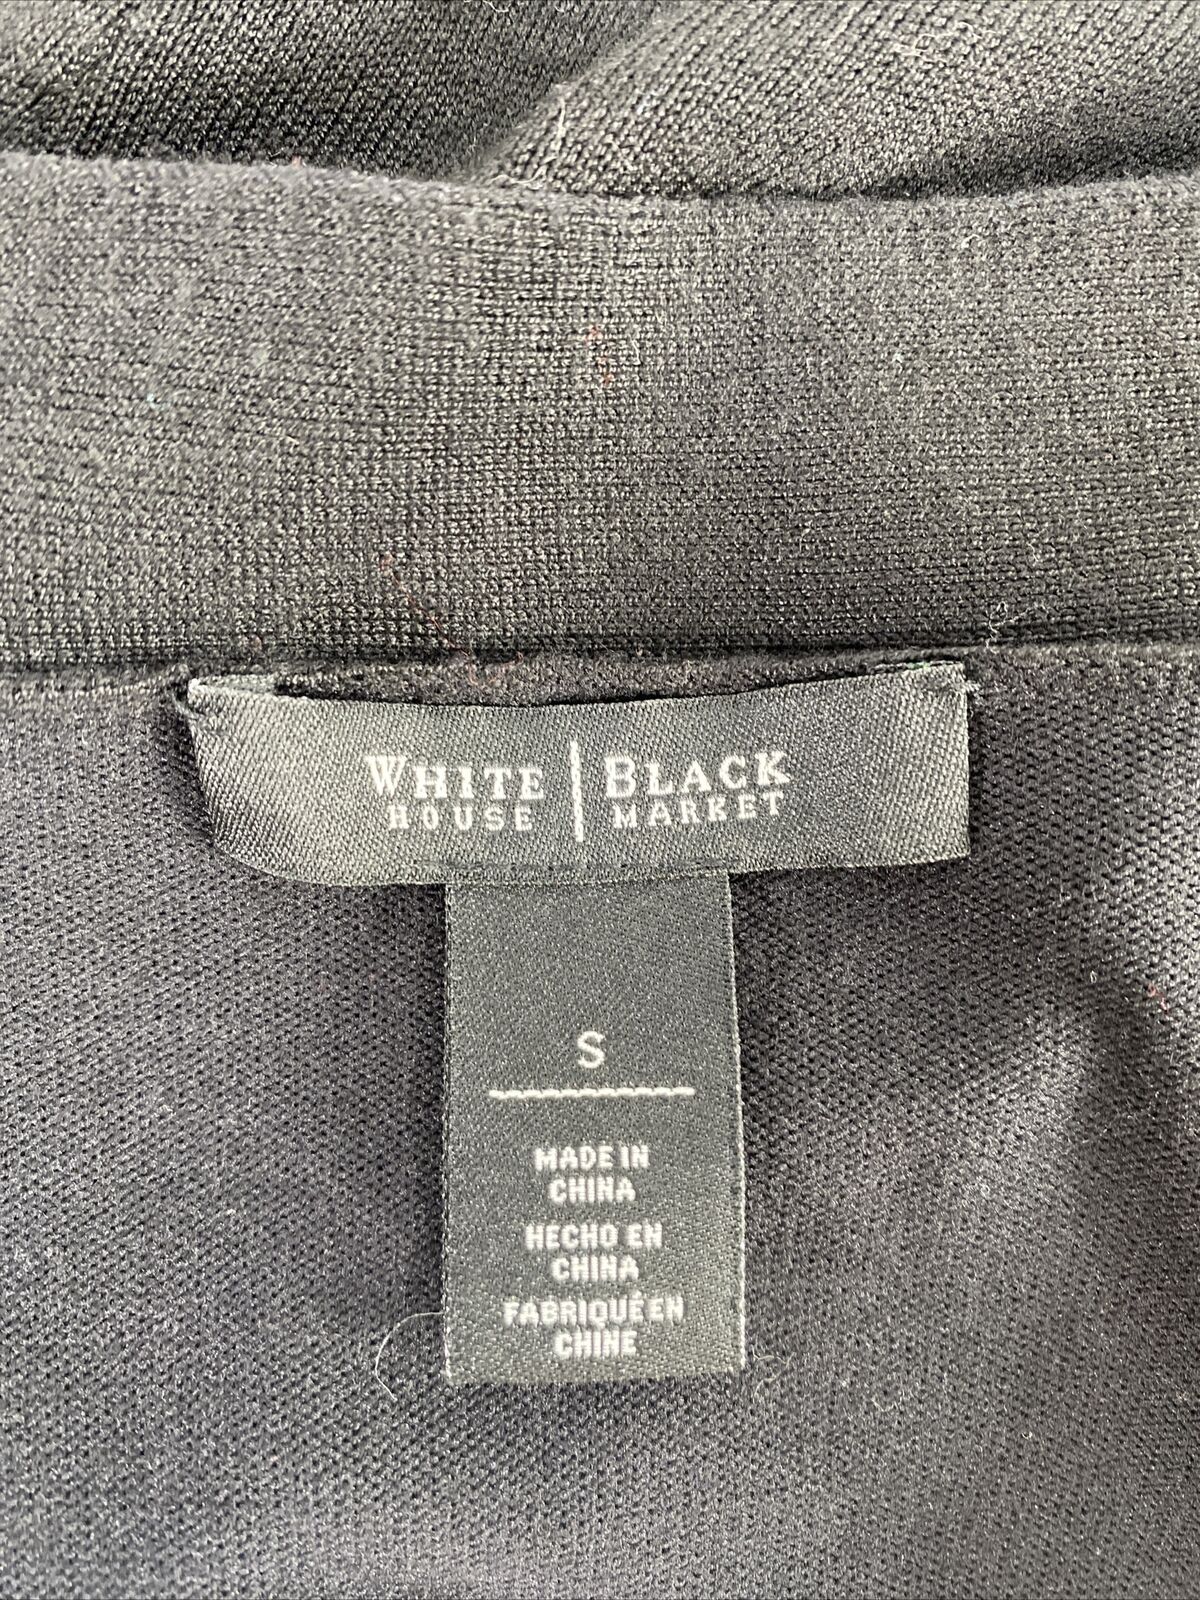 White House Black Market Women's Black One Button Cardigan Sweater - S